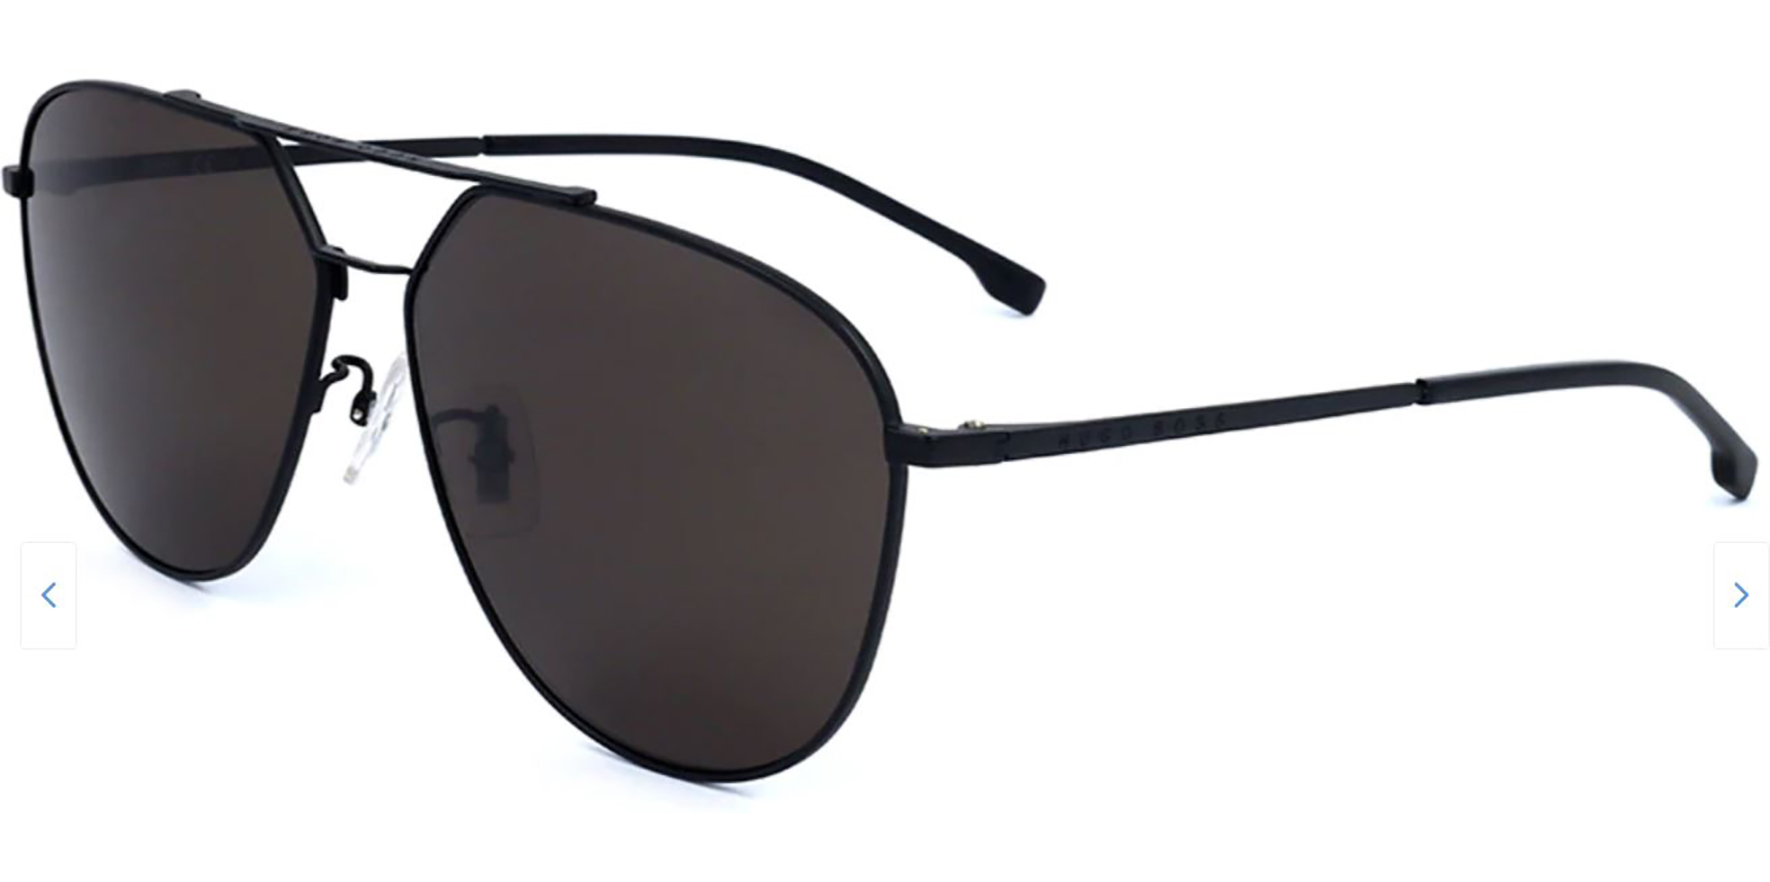 Hugo Boss Men's Sunglasses (various styles) (Polarized and Non) $36 + Free Shipping